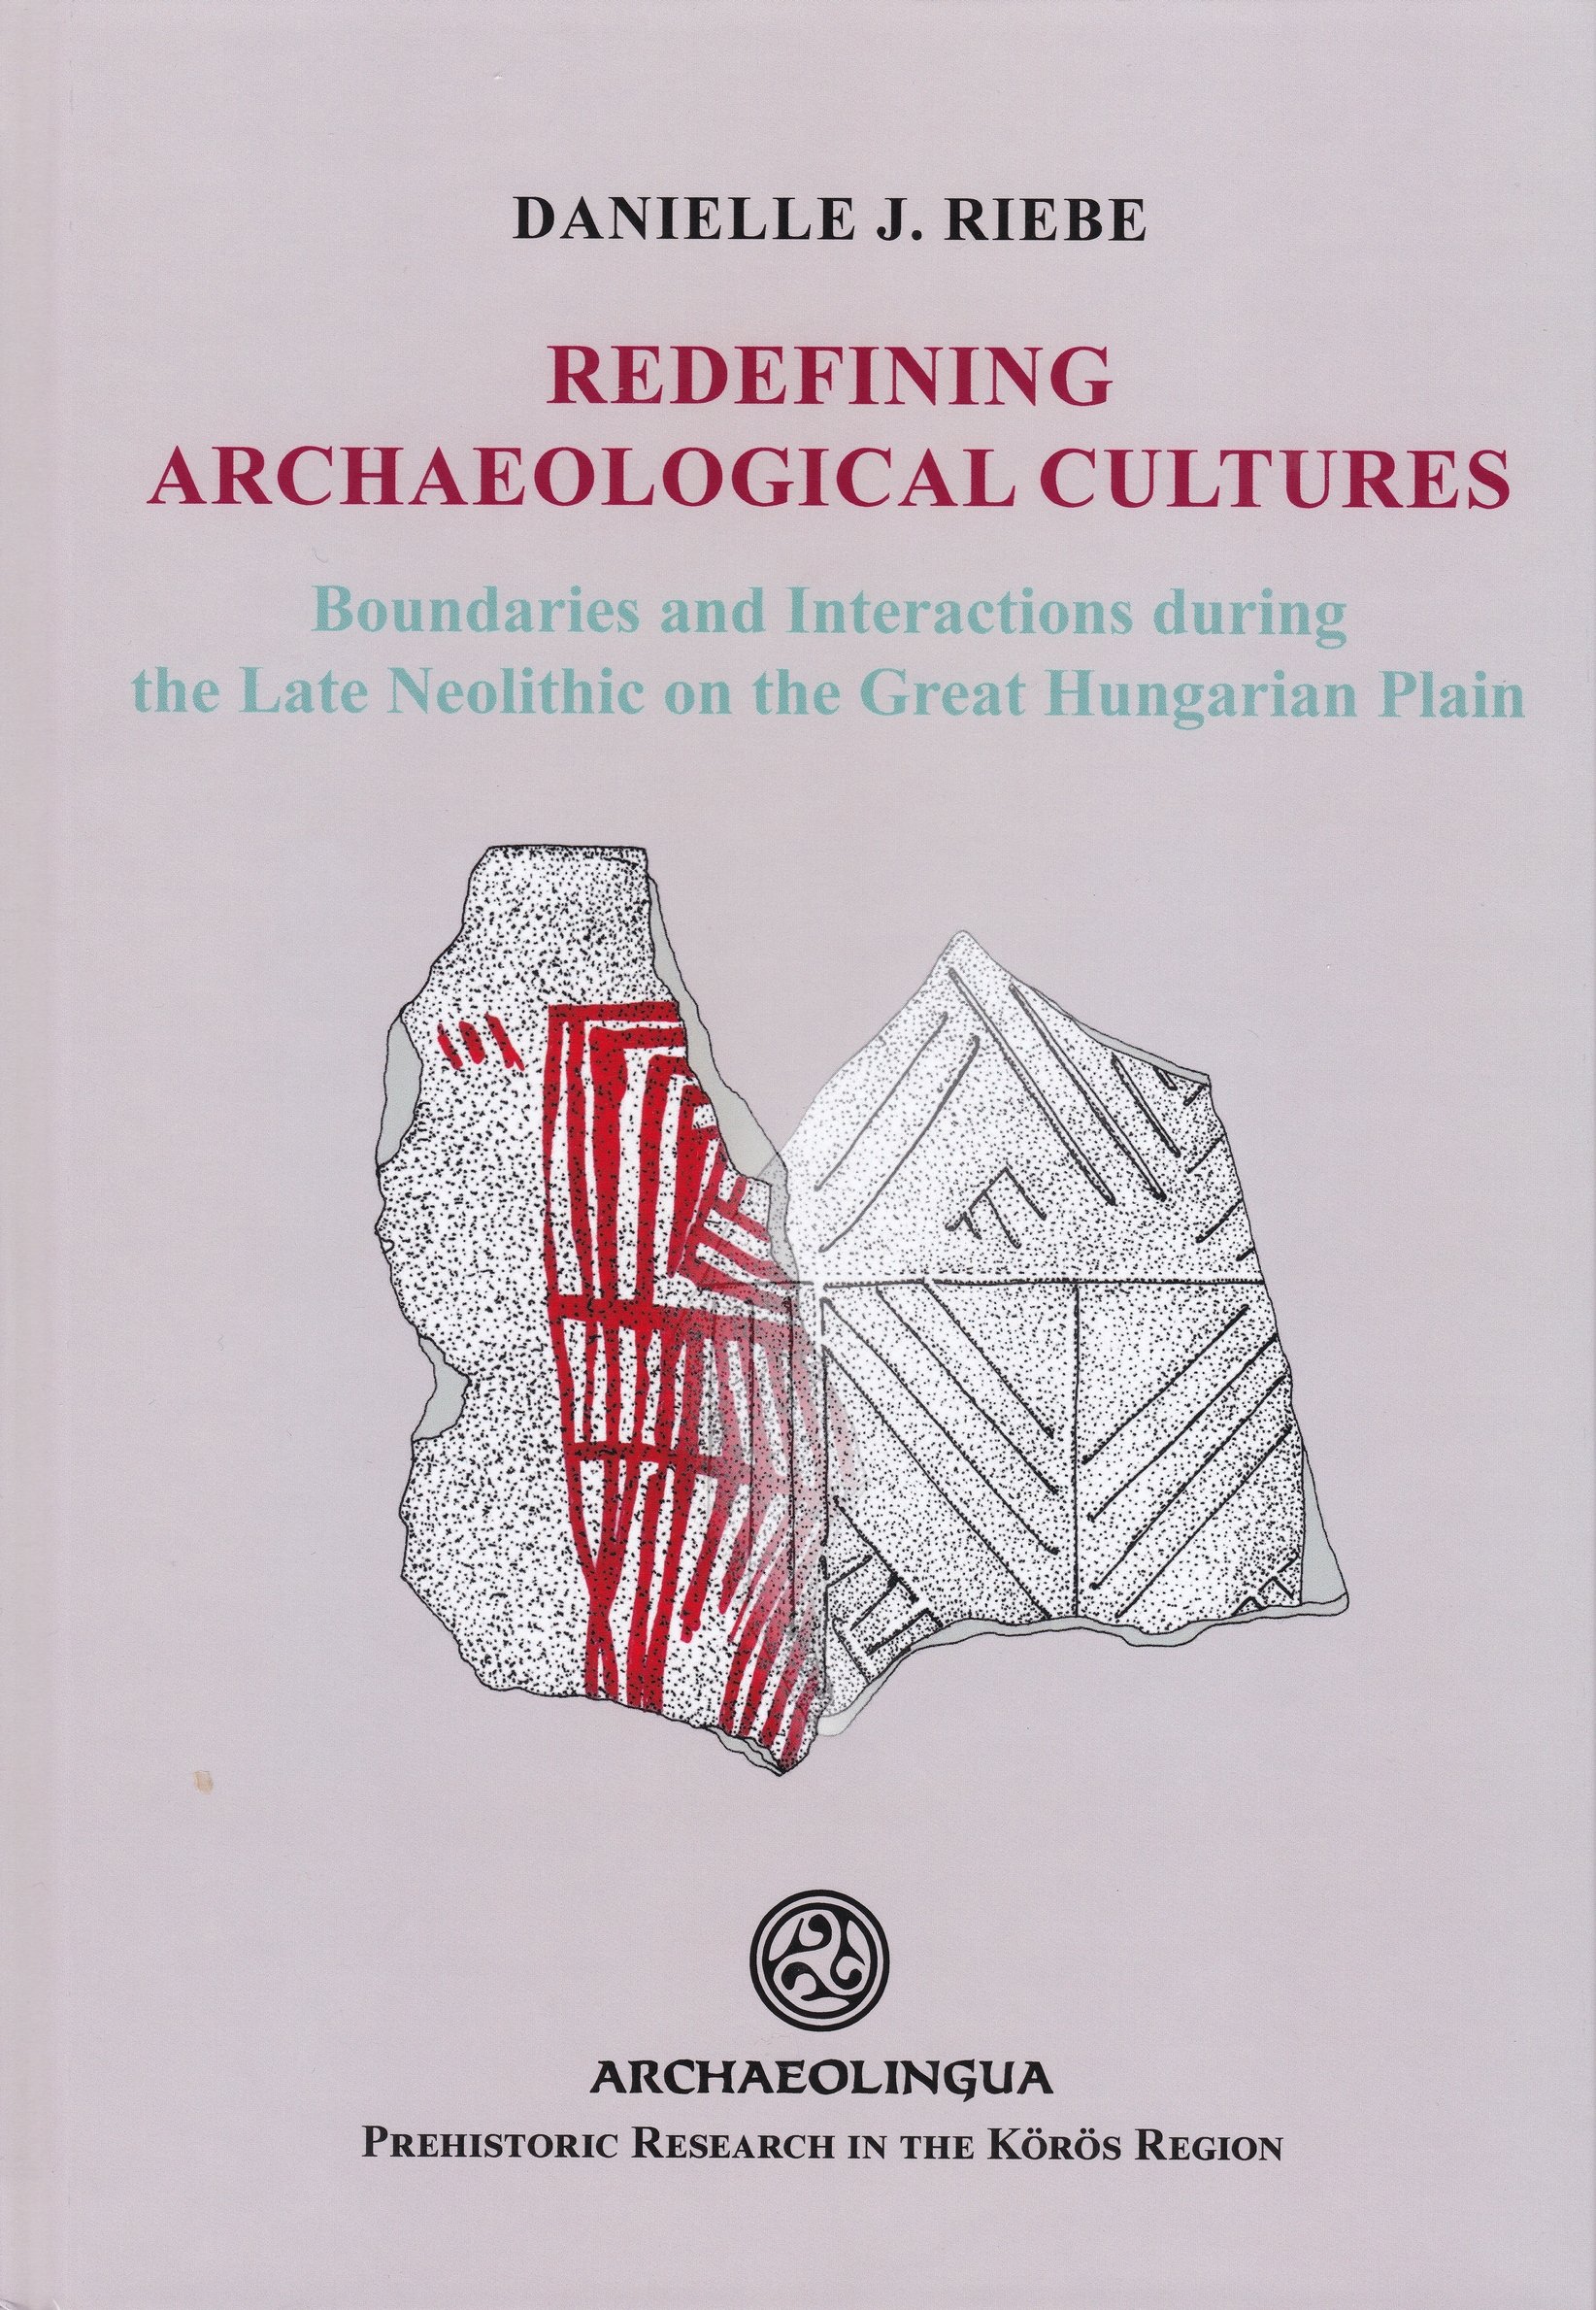 Danielle J. Riebe: Redefining Archaeological Cultures (Rippl-Rónai Múzeum CC BY-NC-ND)